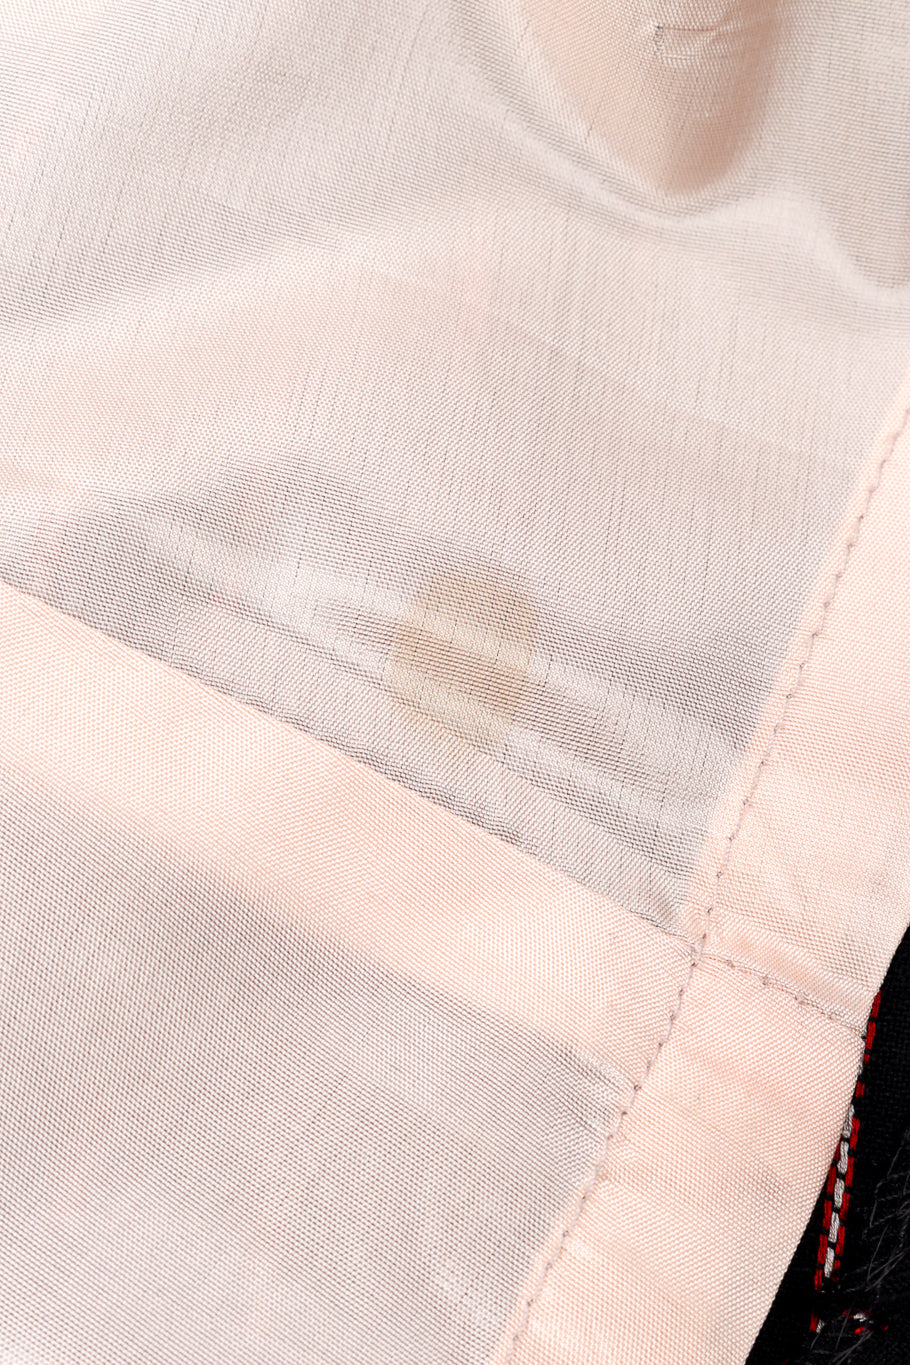 Peplum Flare Jacket & Skirt Suit by Vivienne Westwood lining stain @recessla